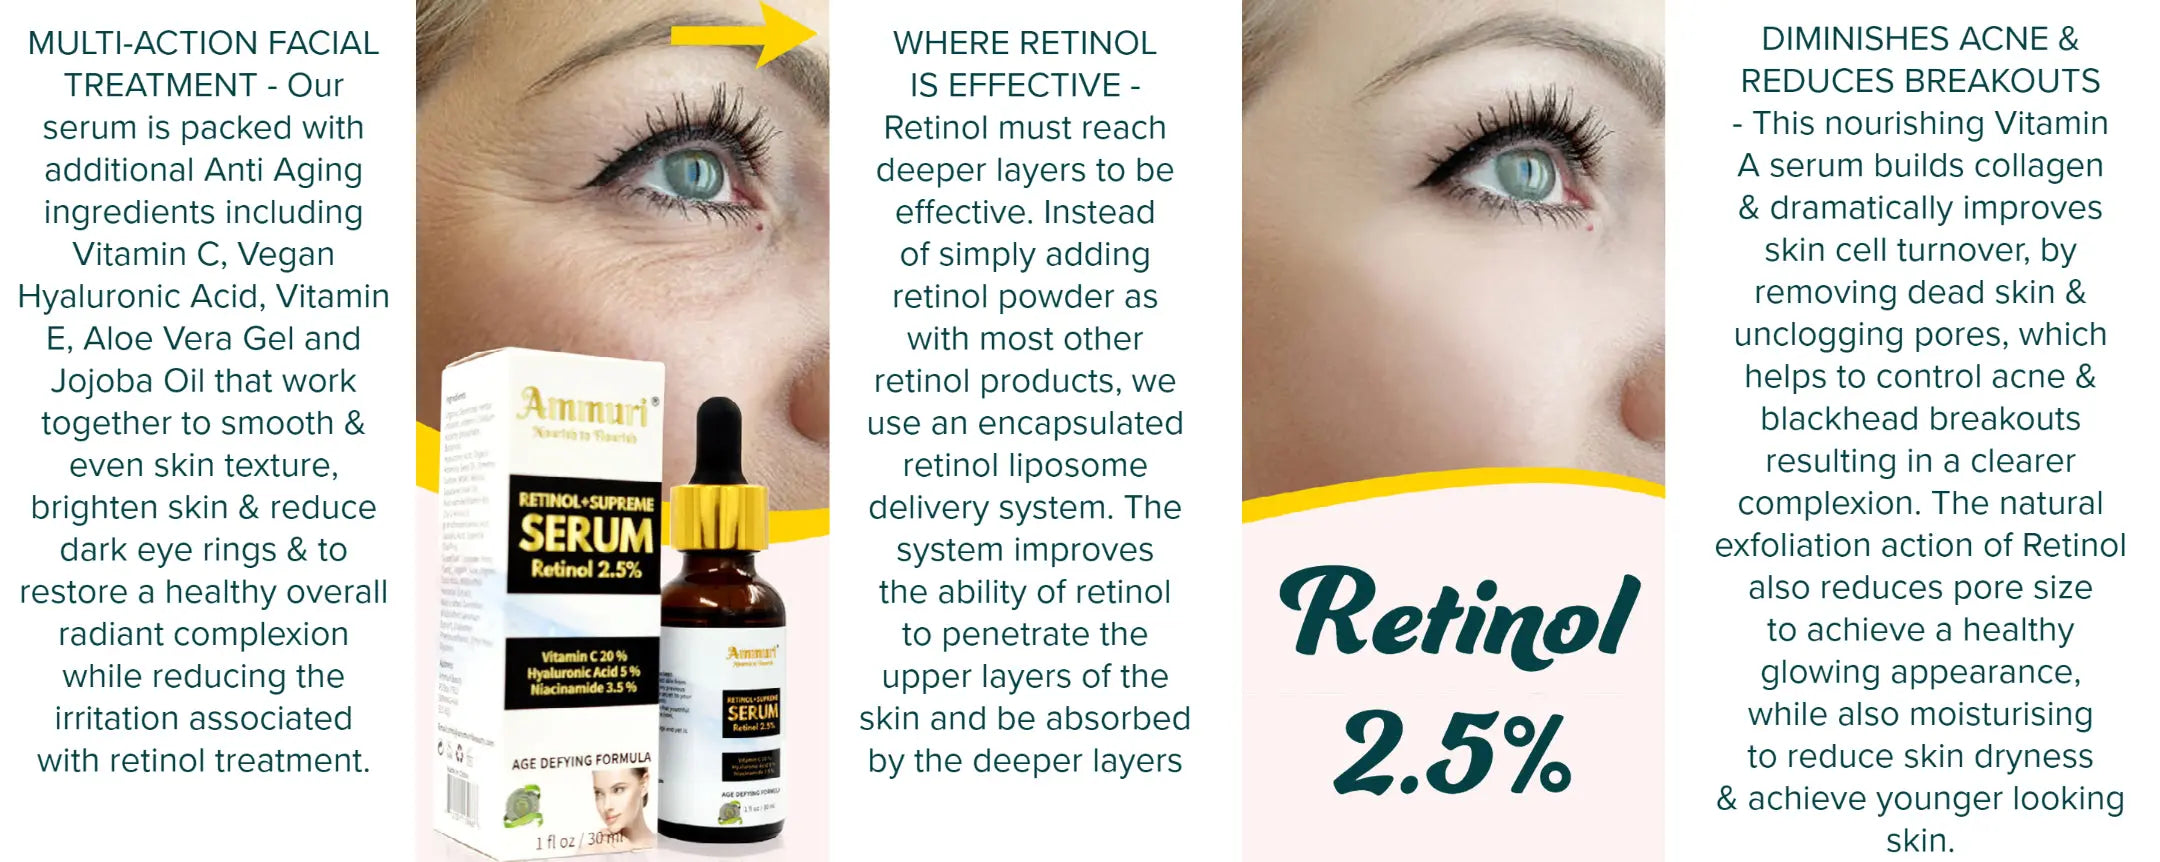 Ammuri Anti Aging Retinol 2.5% Serum with Vitamin Hyaluronic Acid plus Niacinamide perfect beauty Ammuri Skincare